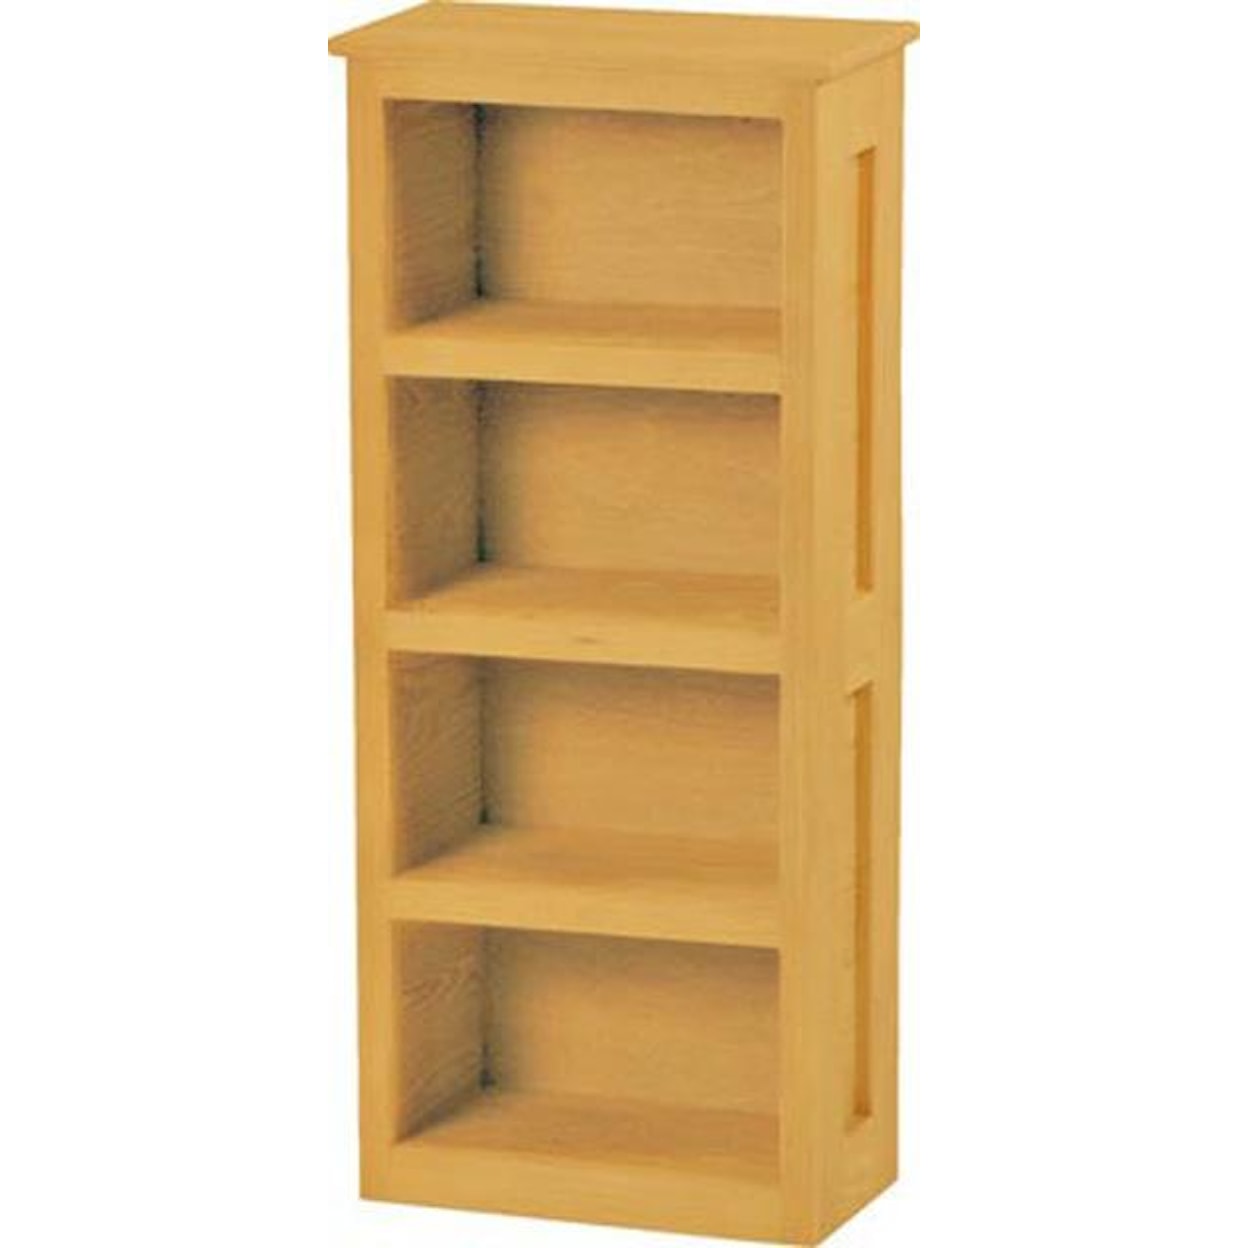 Crate Designs Crate Designs - Bedroom Loft Bookcase